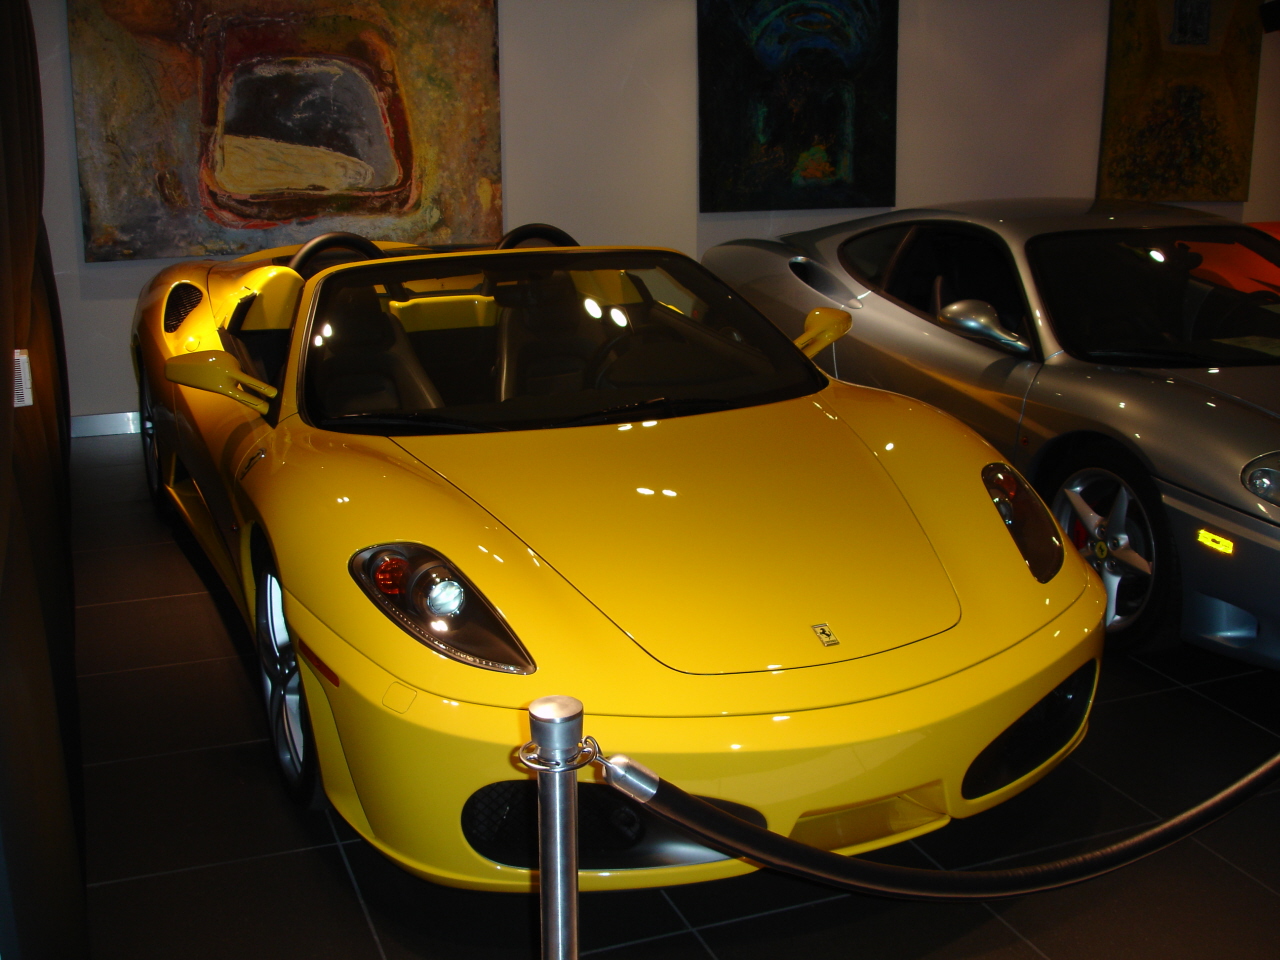 Visita al Museo Lamborghini Las Vegas/ Visit to Lamborghini Museum LasVegas-Lamborghini31.JPG